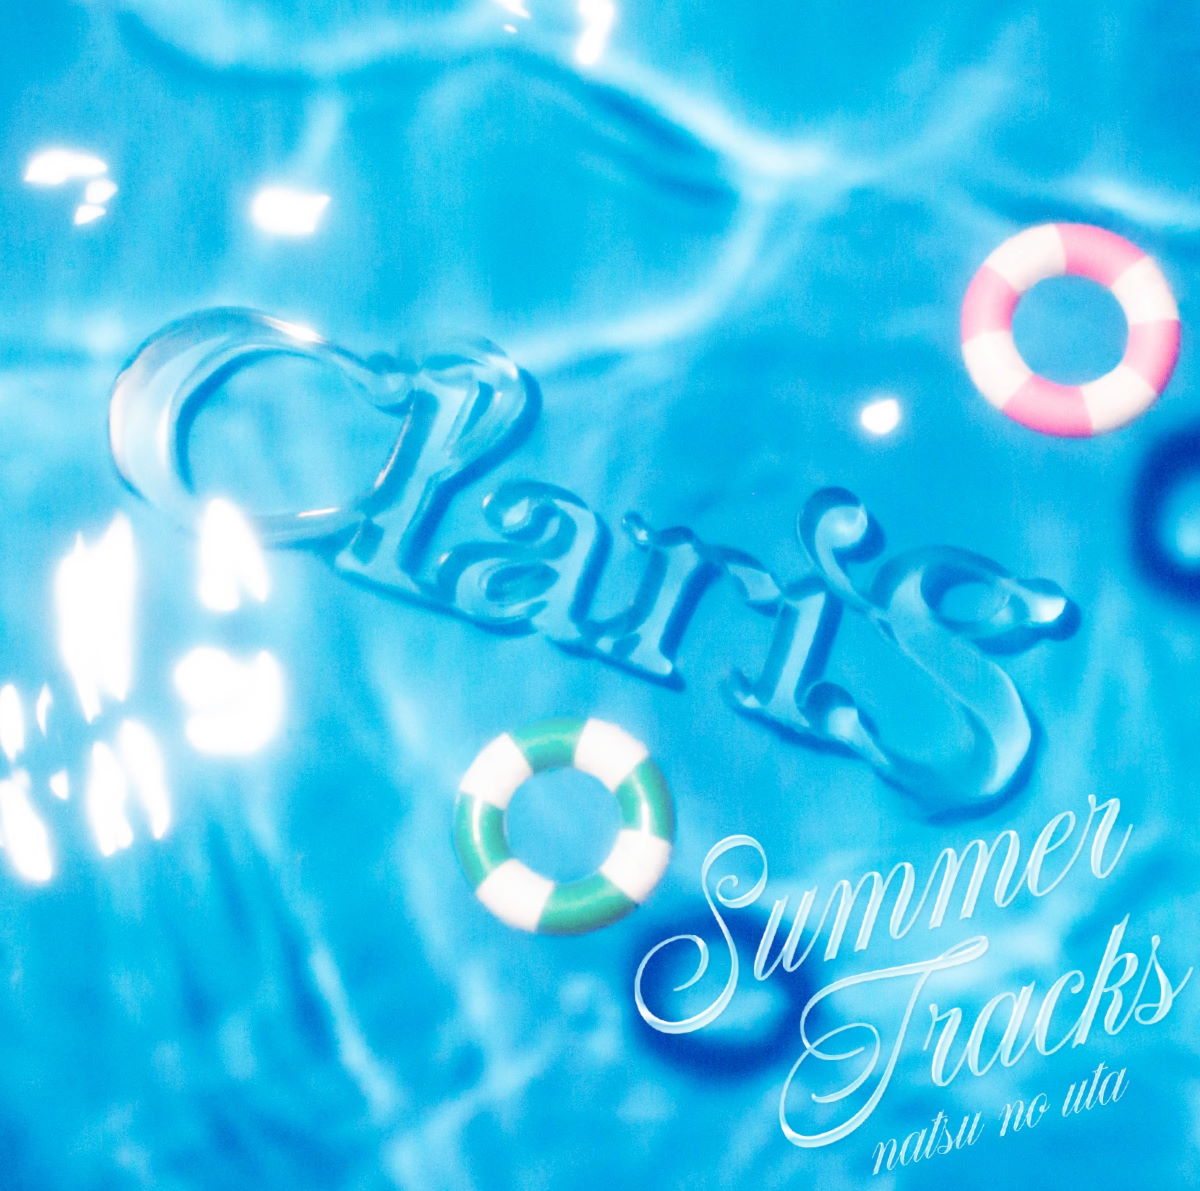 Cover for『ClariS - Diamonds』from the release『SUMMER TRACKS -Natsu no Uta-』